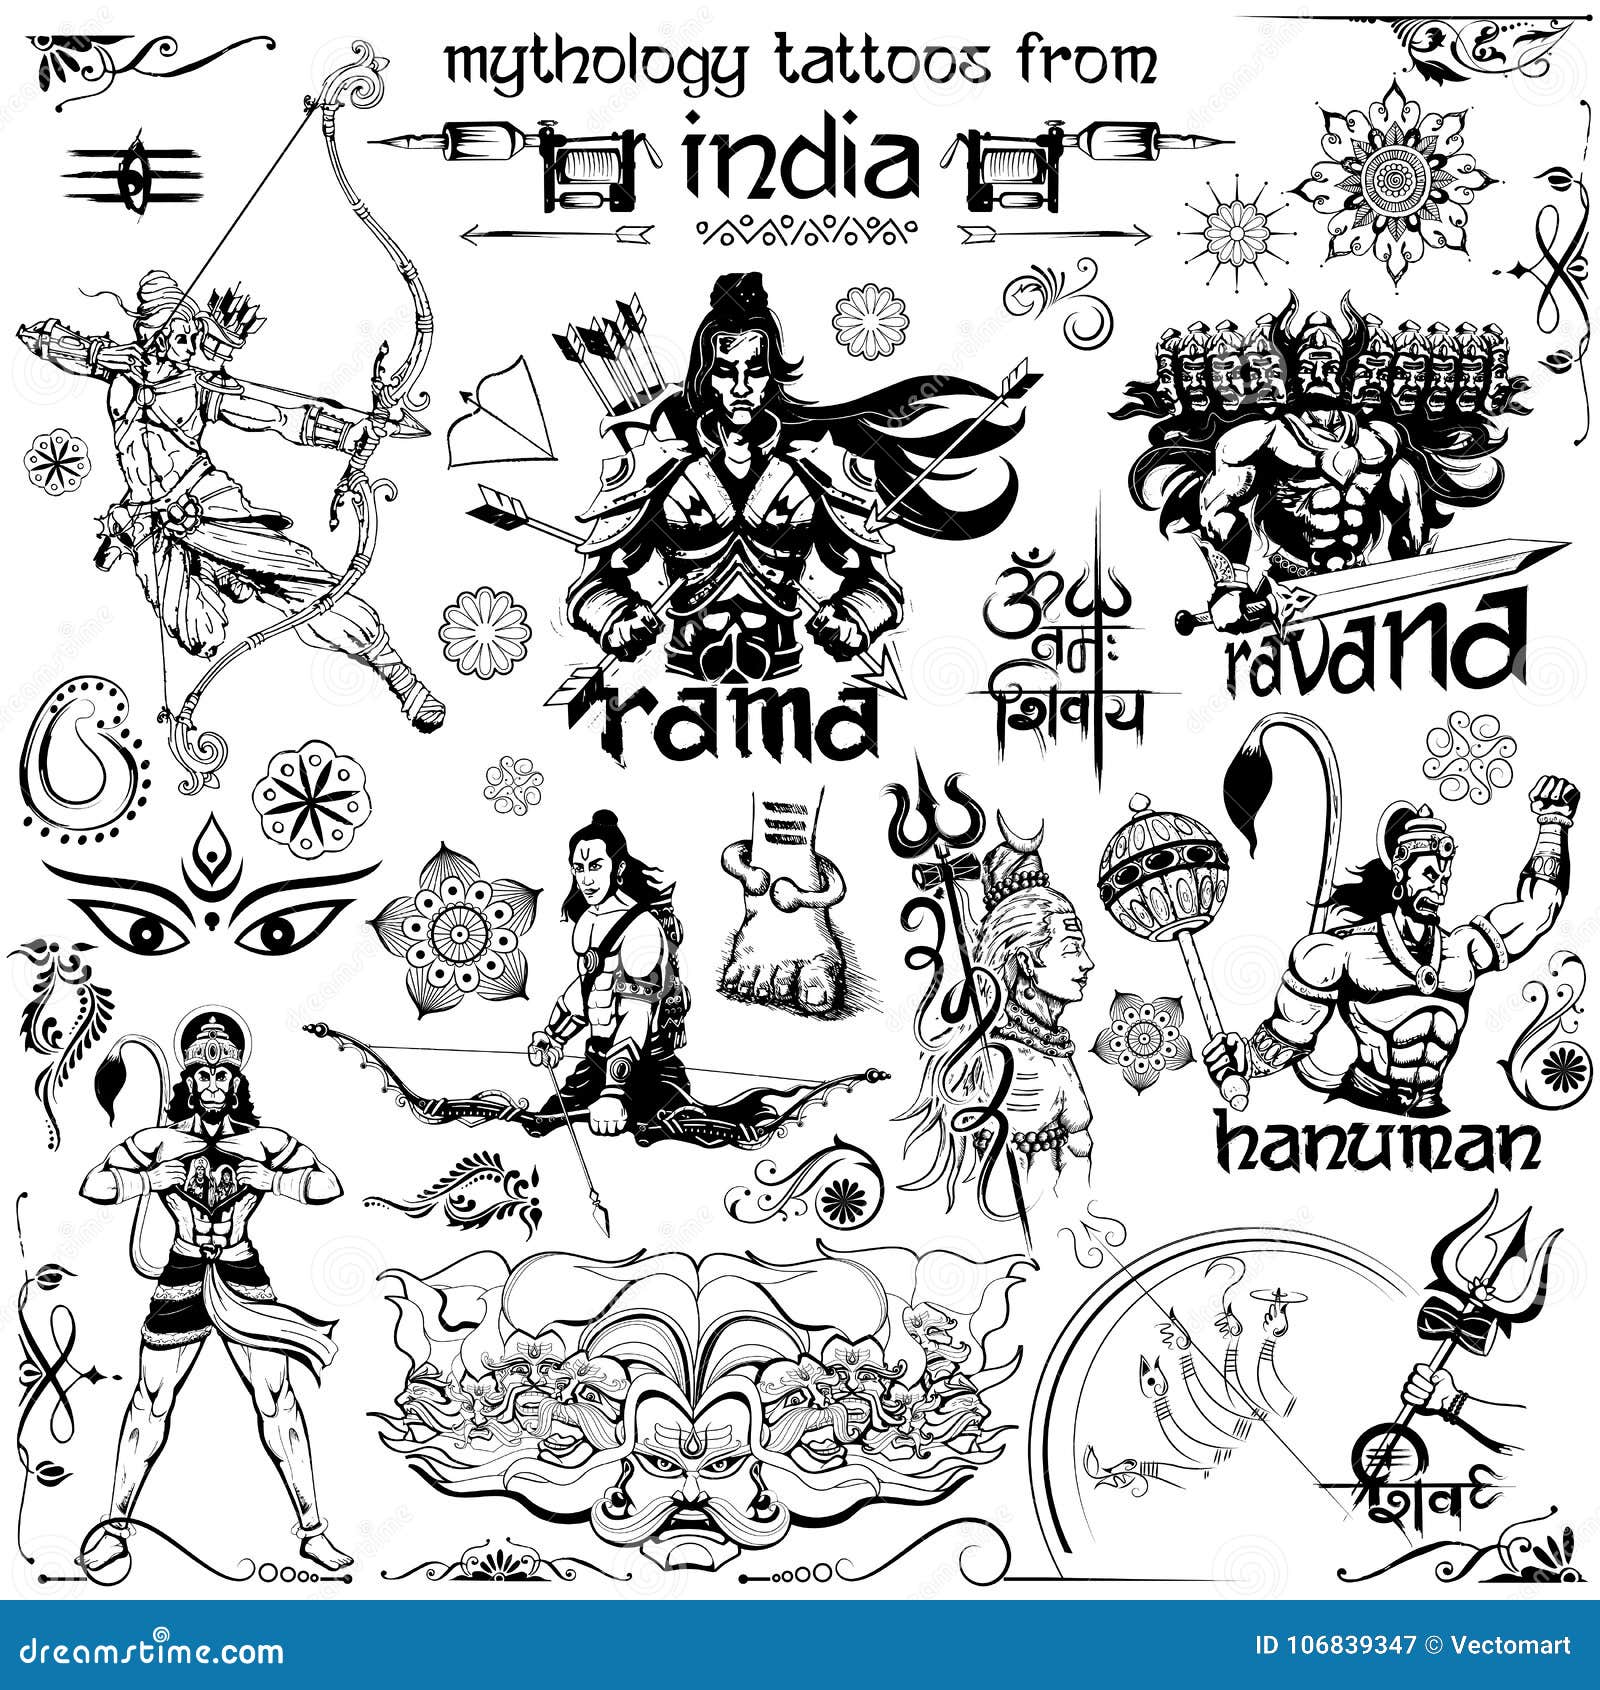 Sanskrit Tattoo DesignWorld Calligraphy, Marriage Certificates, Tattoo  Designs, Logos: Arabic, Persian, Farsi, Sanskrit, English, Hebrew, Amharic,  etc.